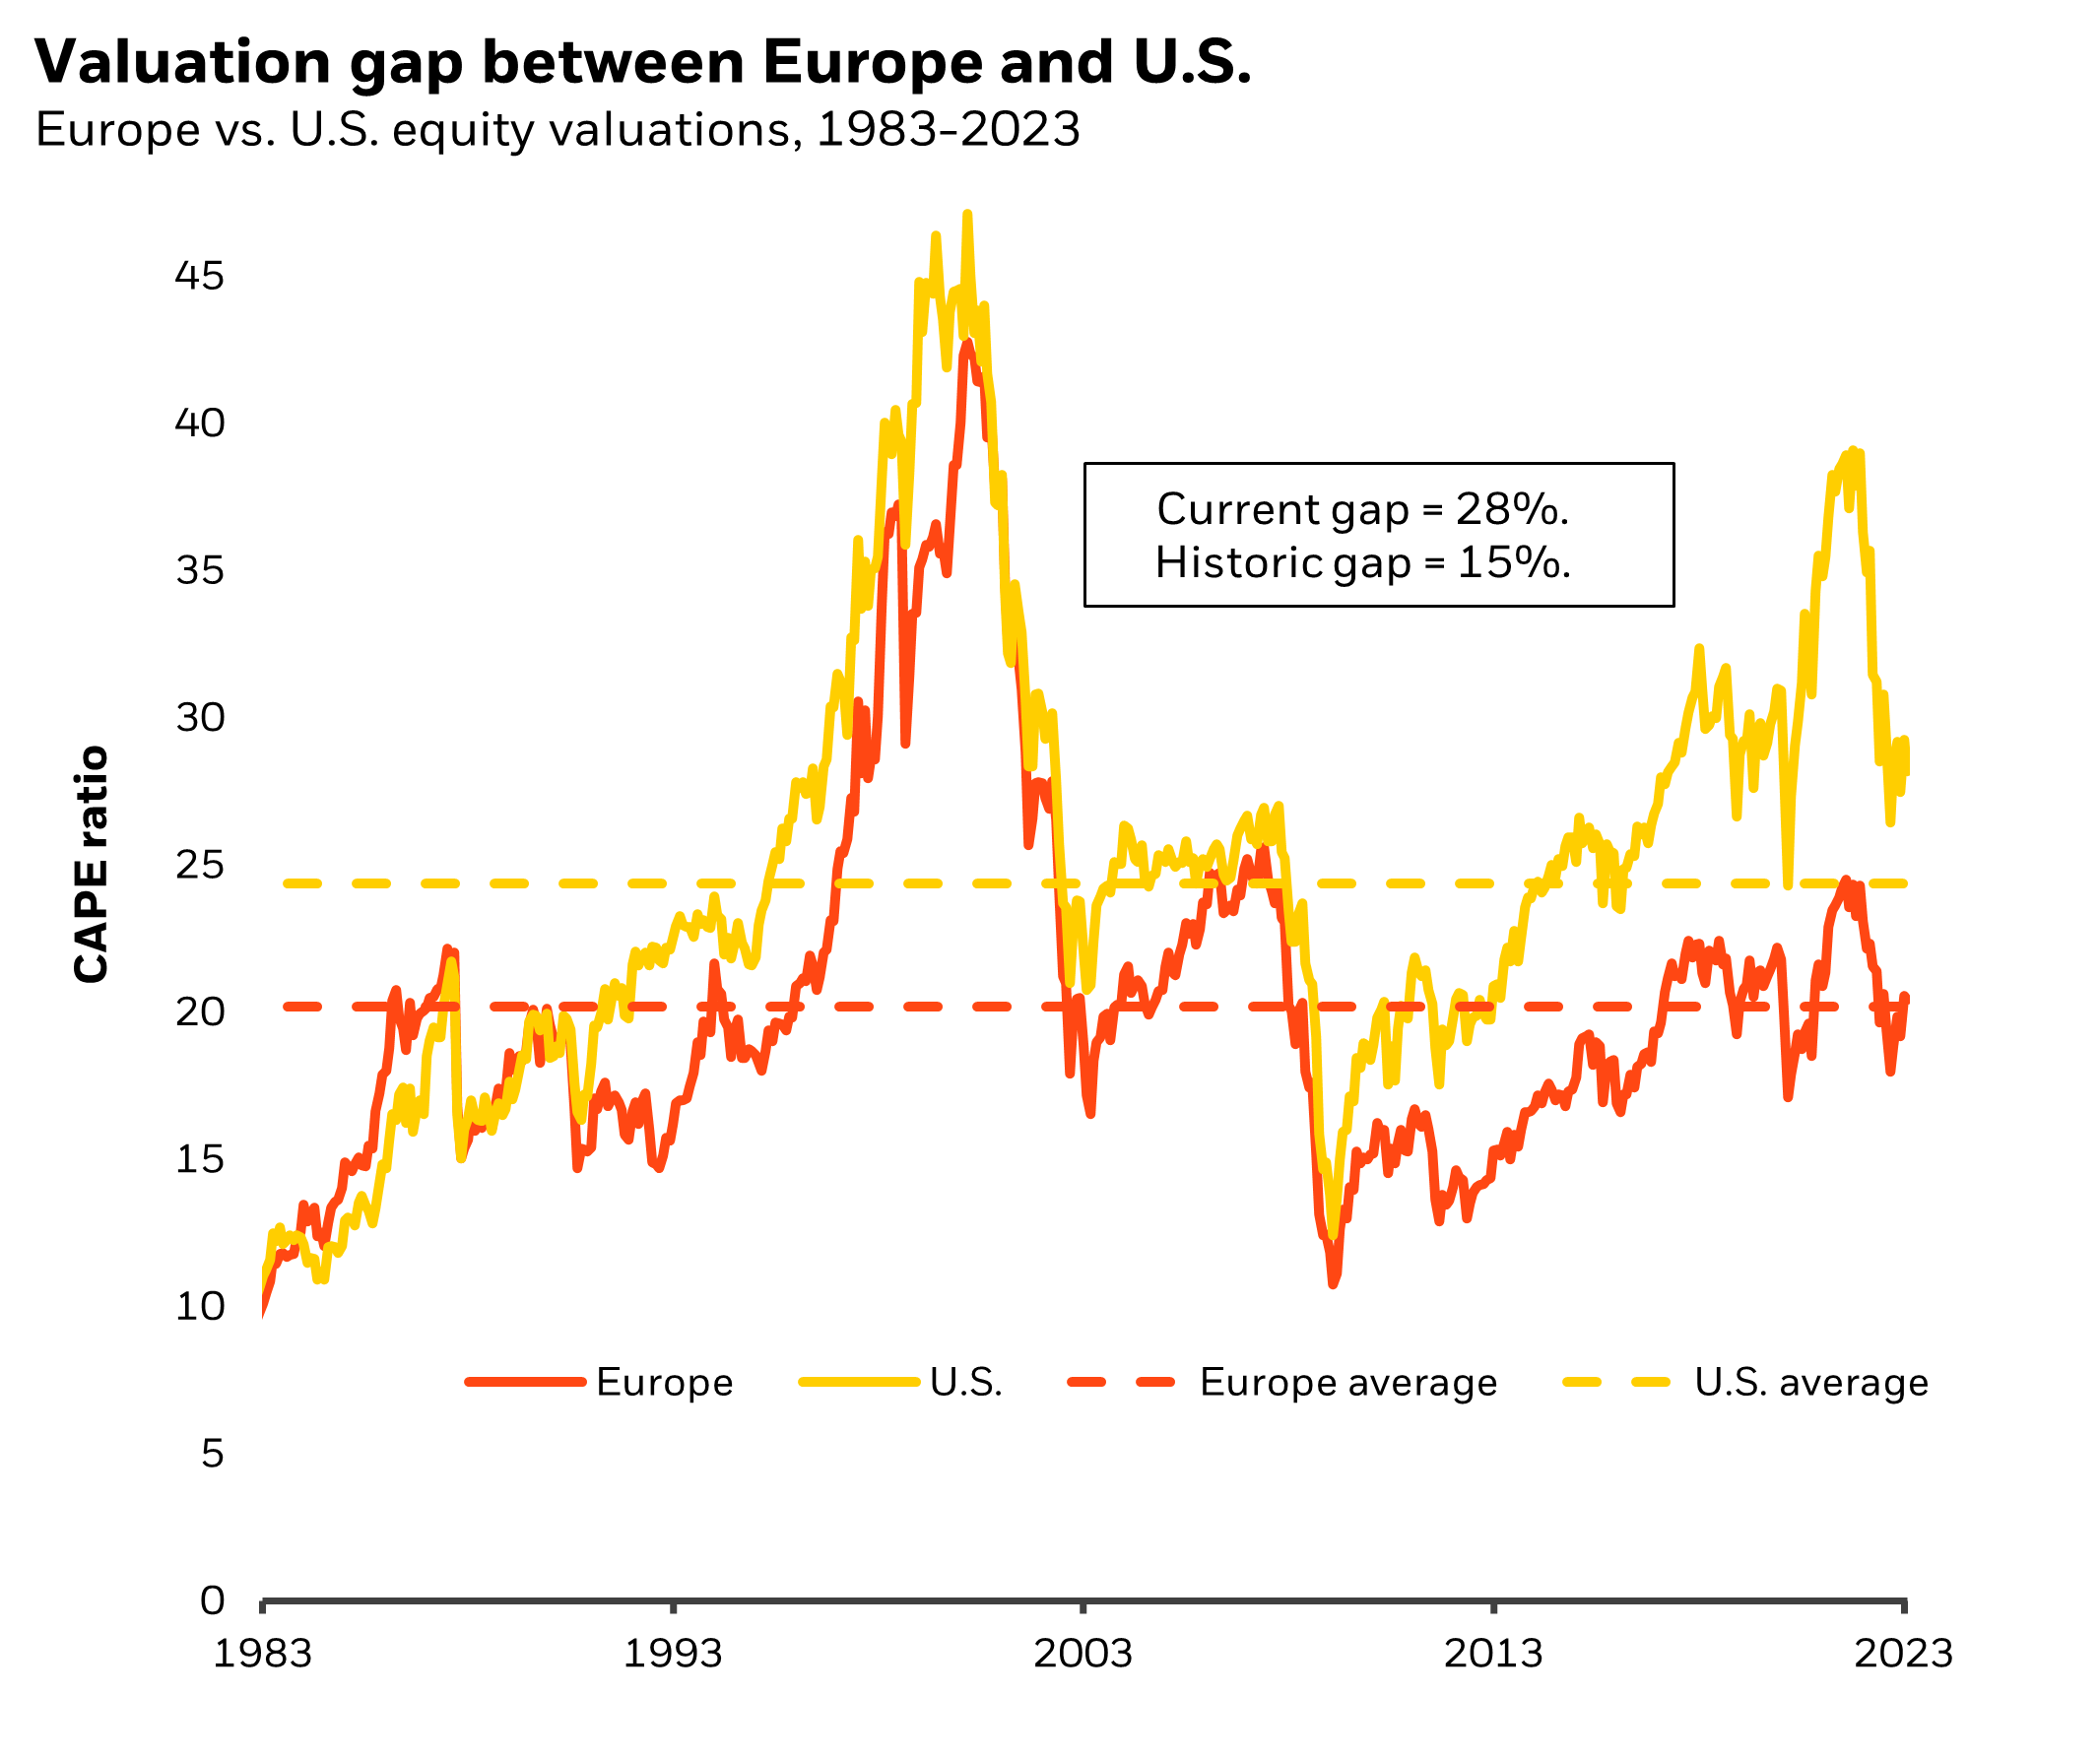 Europe vs. U.S. equity valuations, 1983-2023